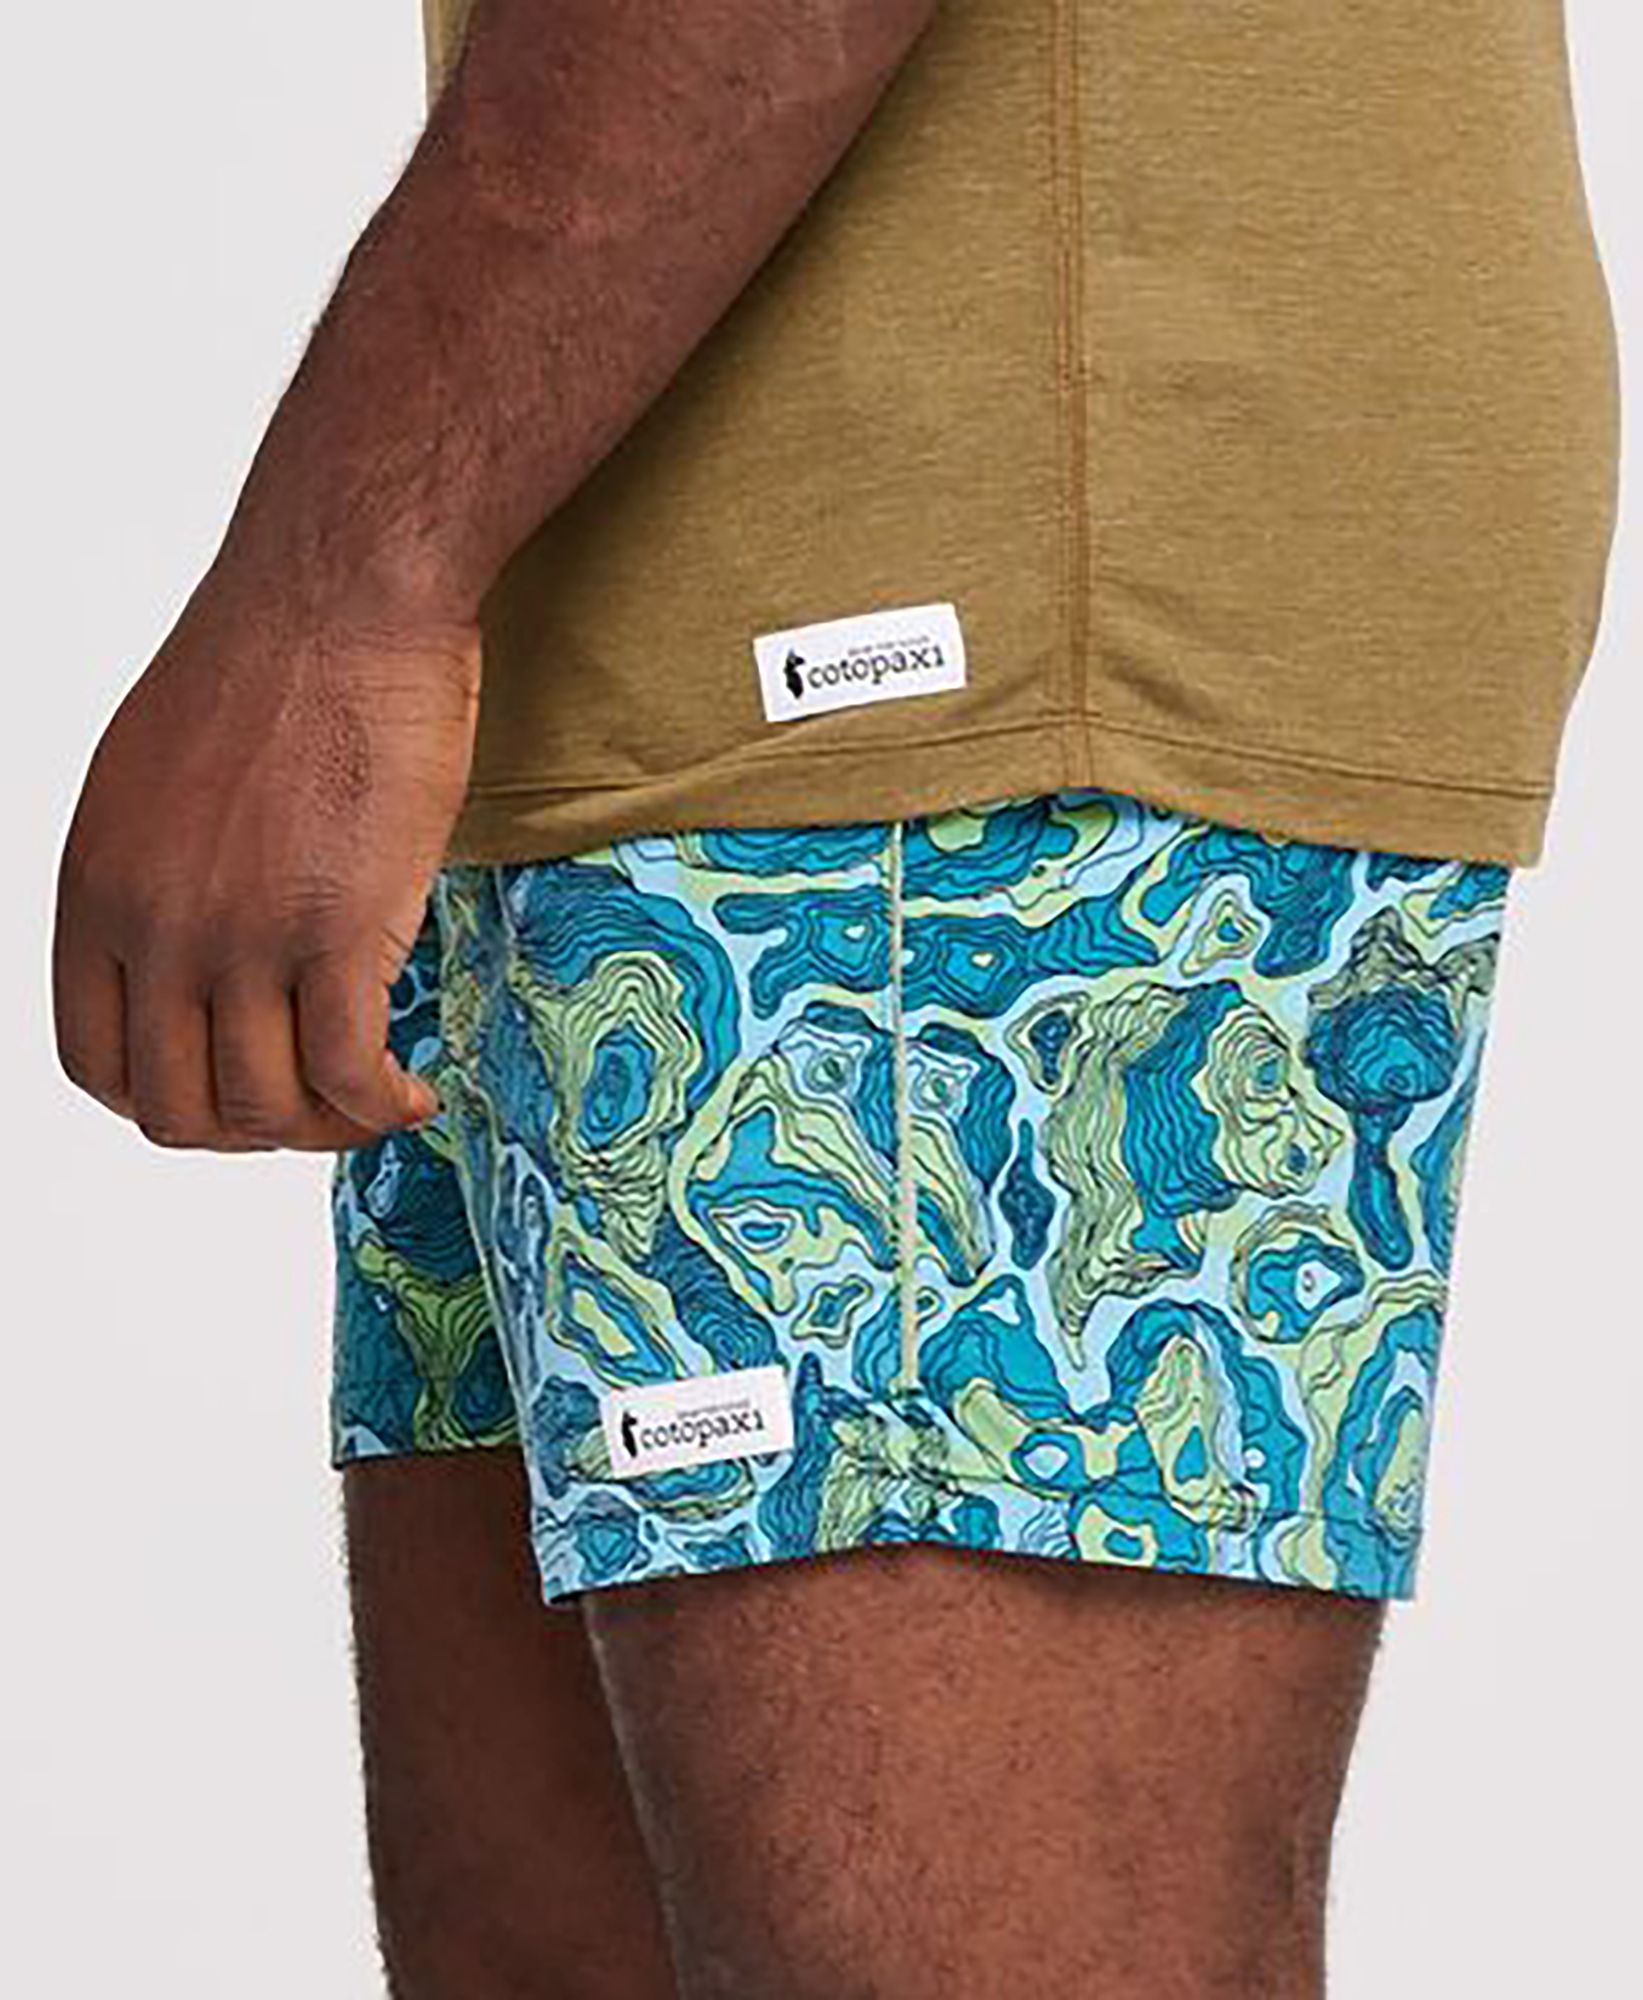 Cotopaxi Brinco Print Shorts